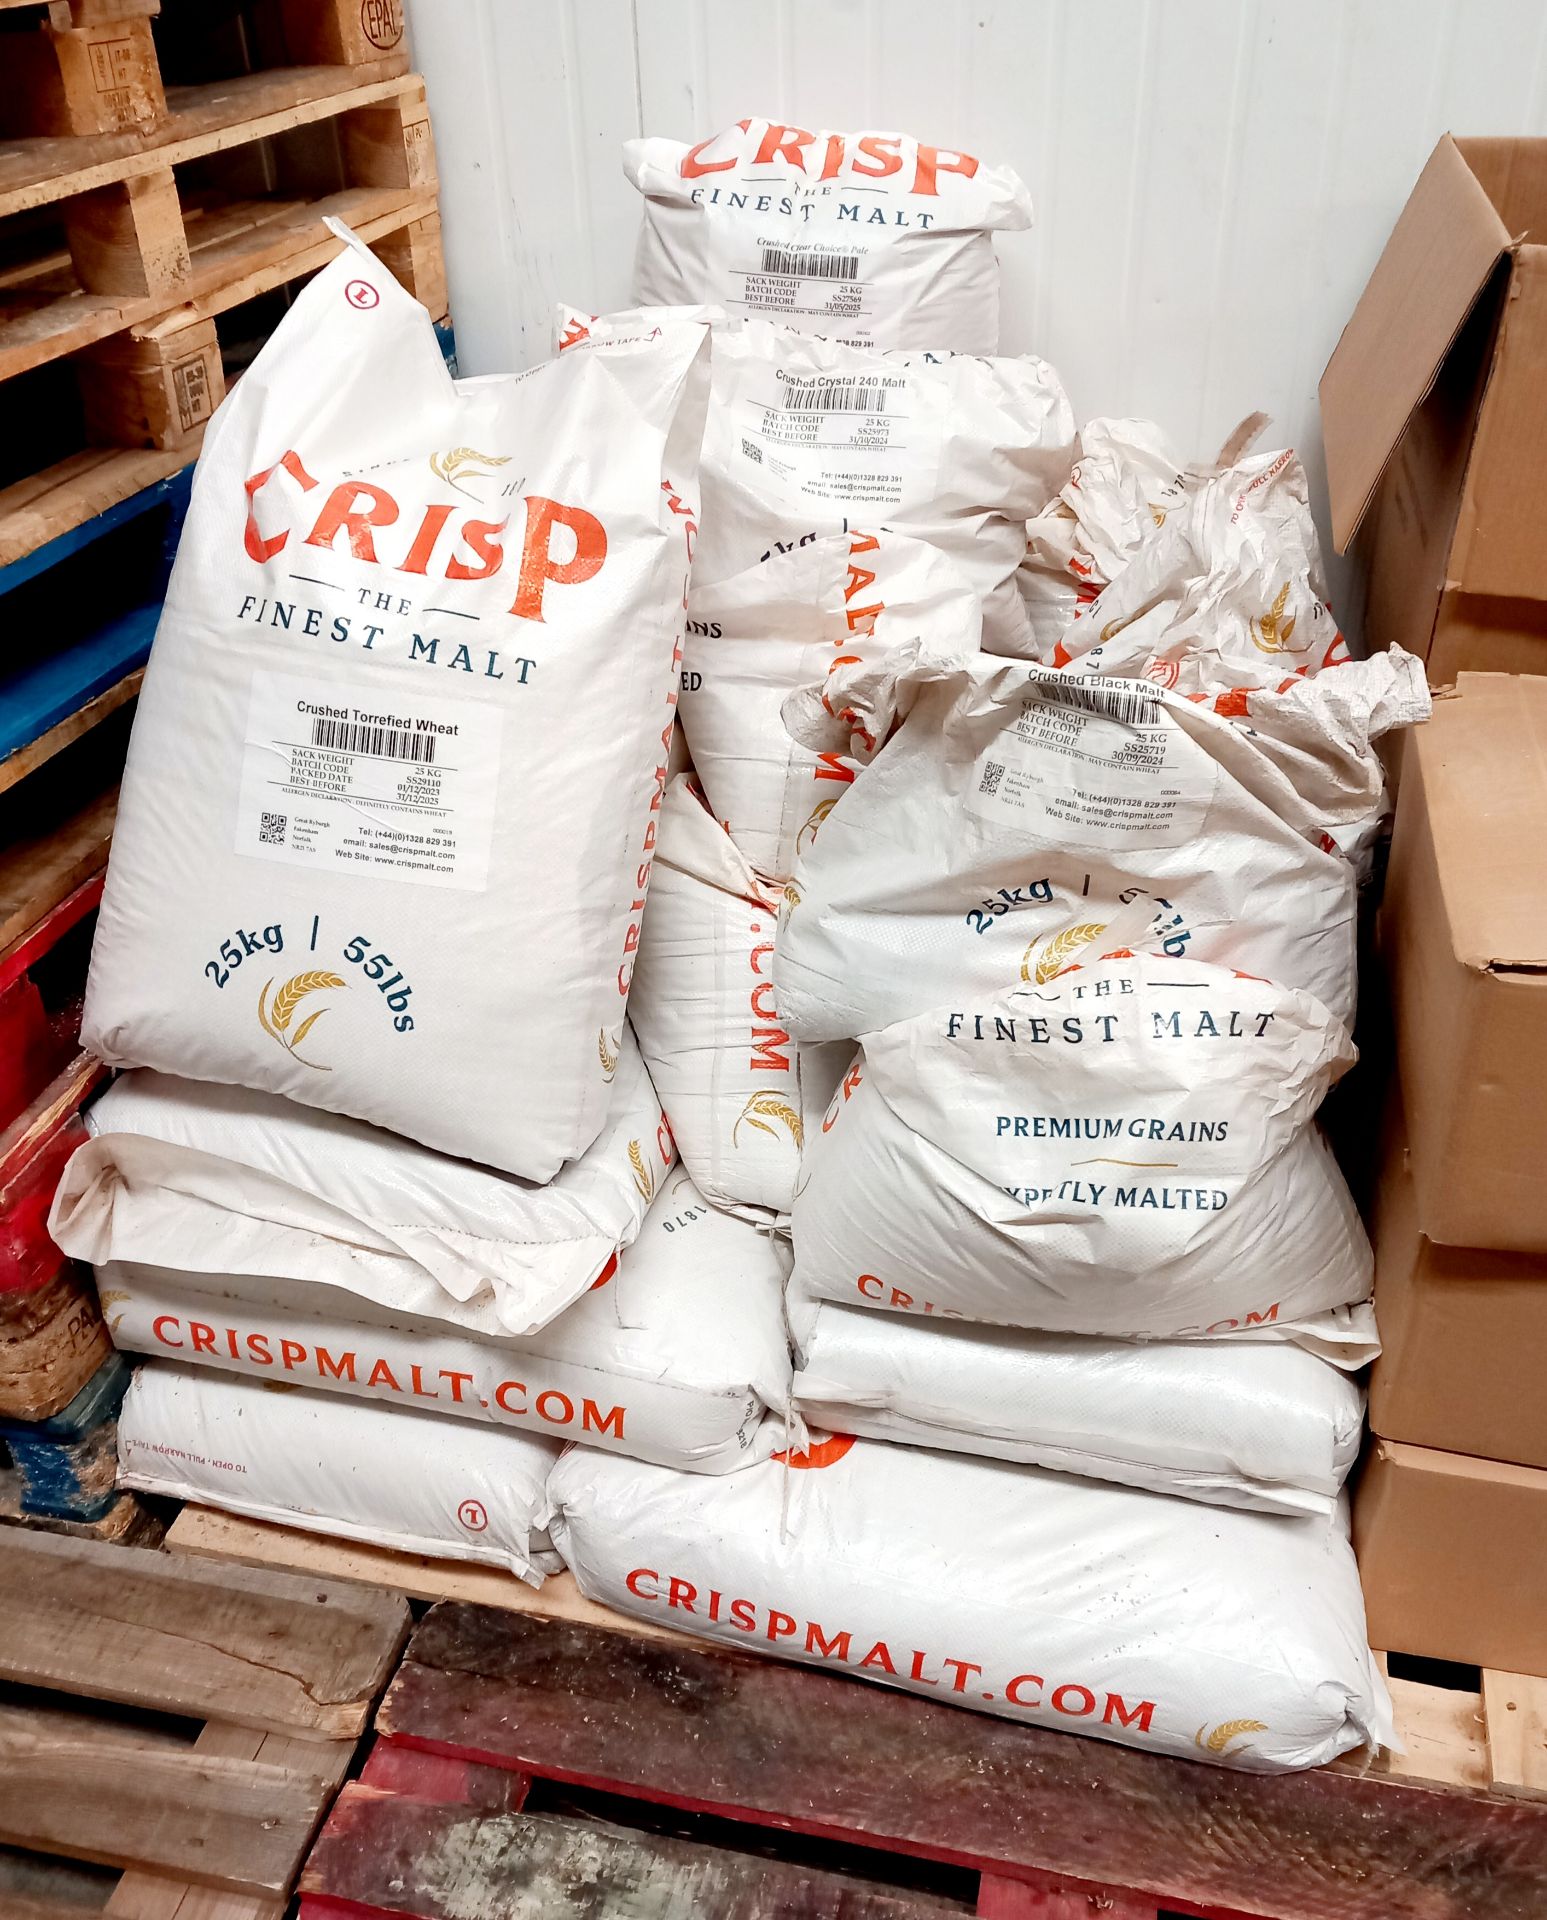 Approximately 20x Crisp 25kg bags of various malt